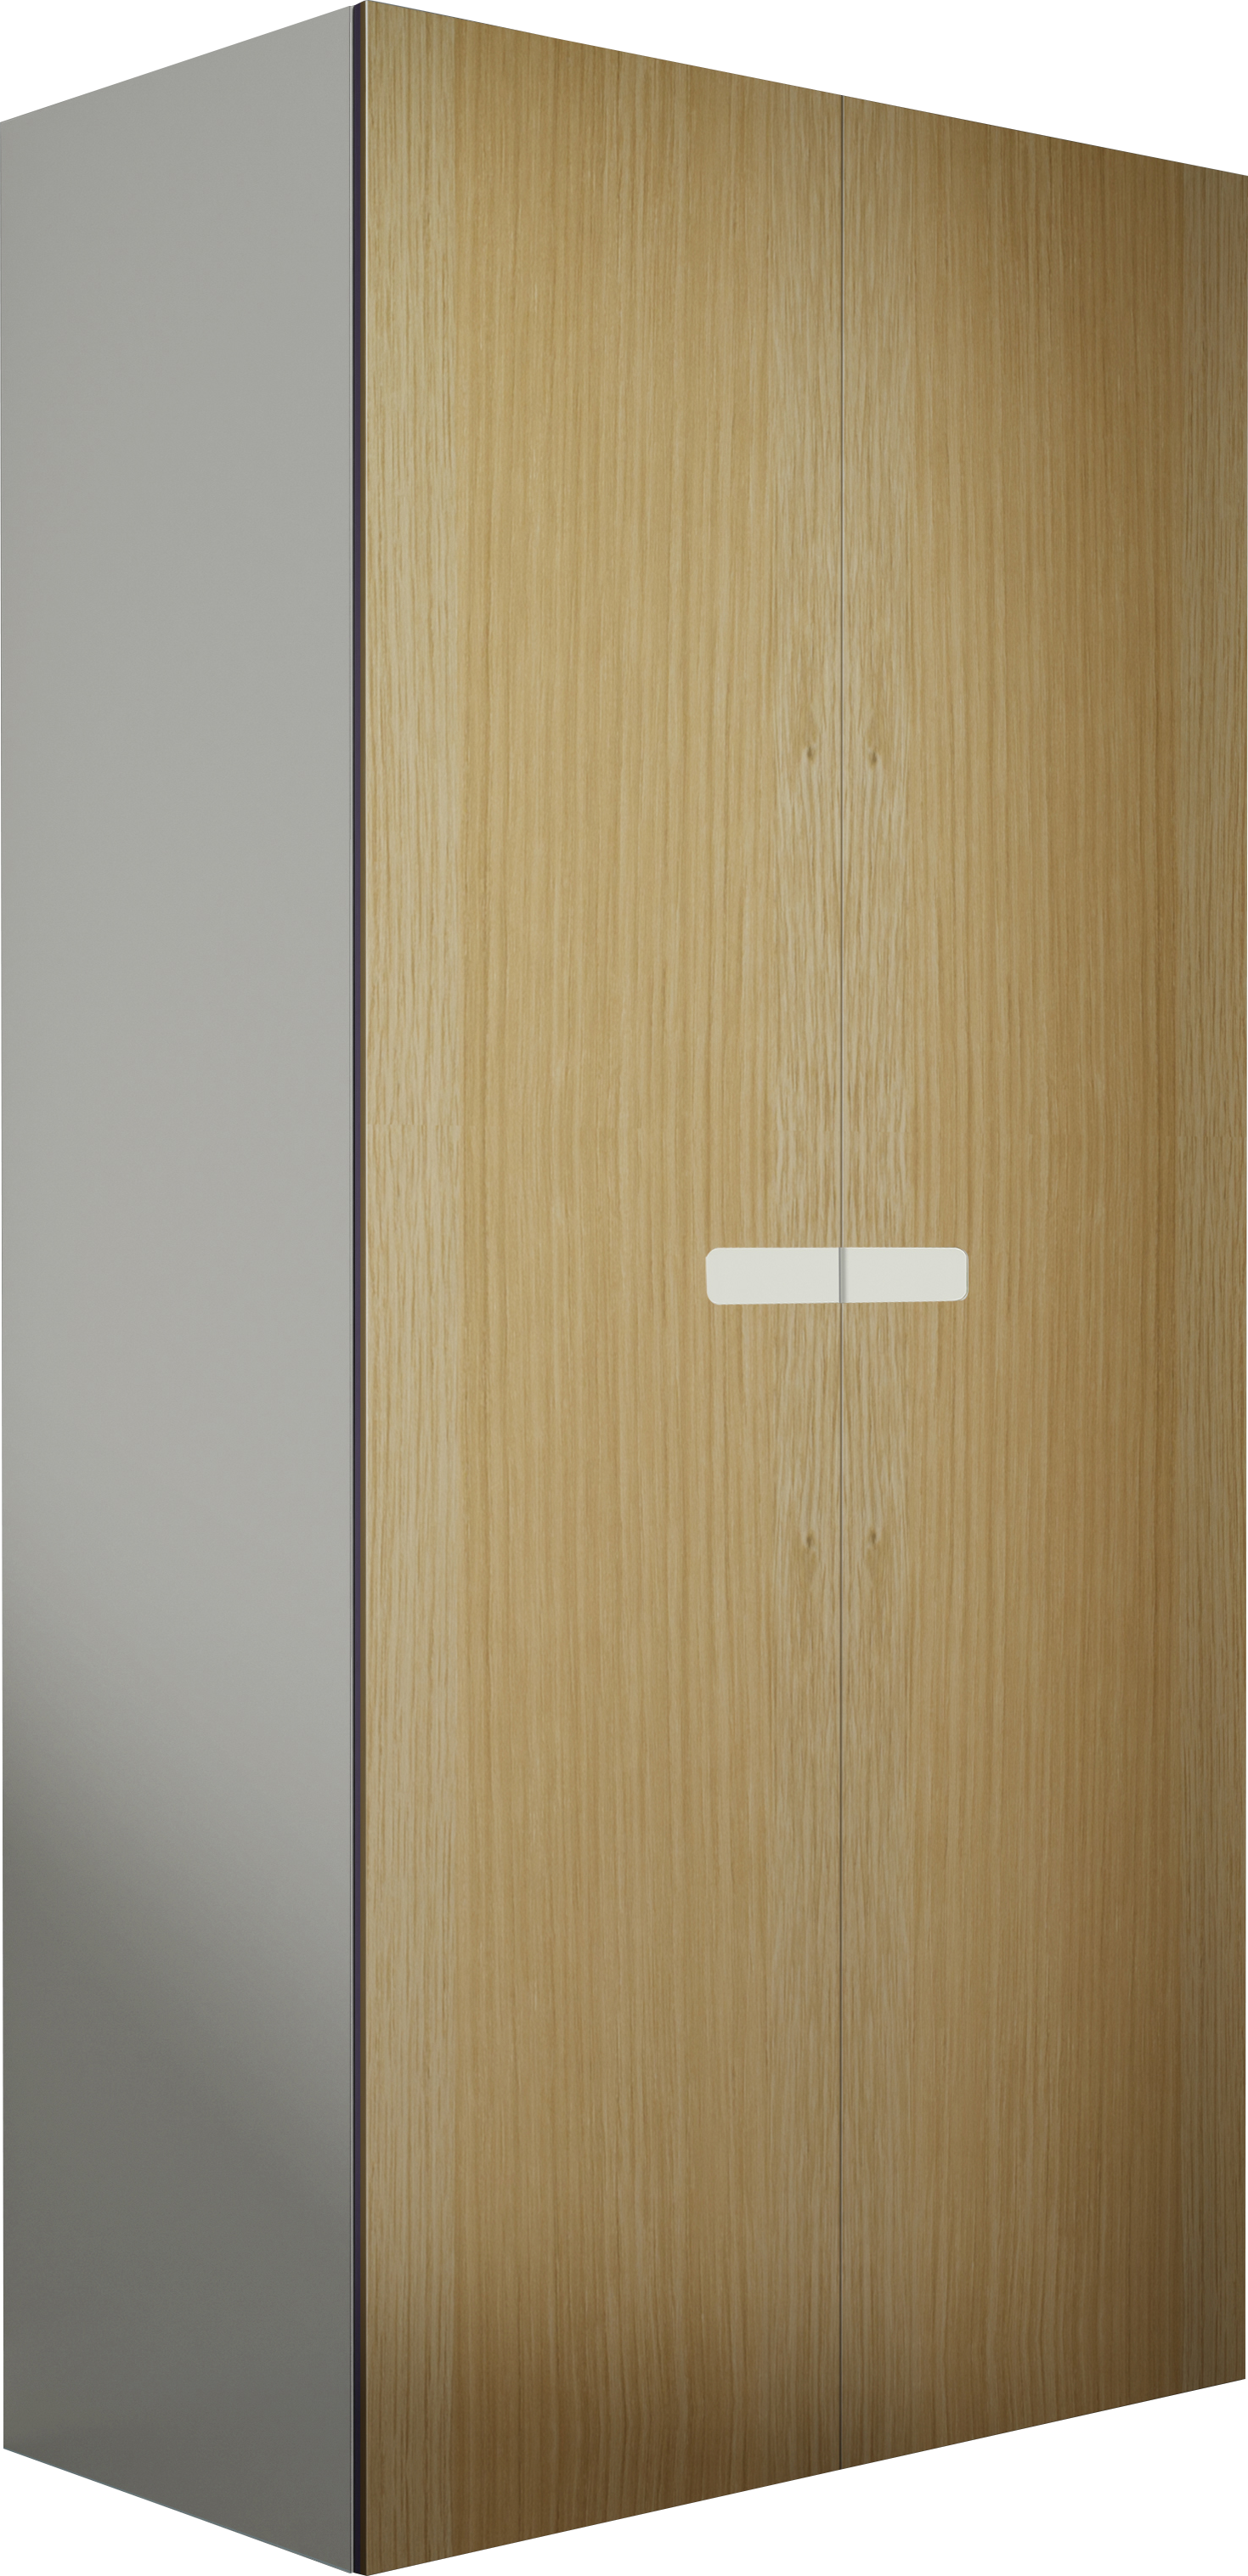 Armario ropero puerta abatible spaceo home nepal roble-blanco 240x120x60cm